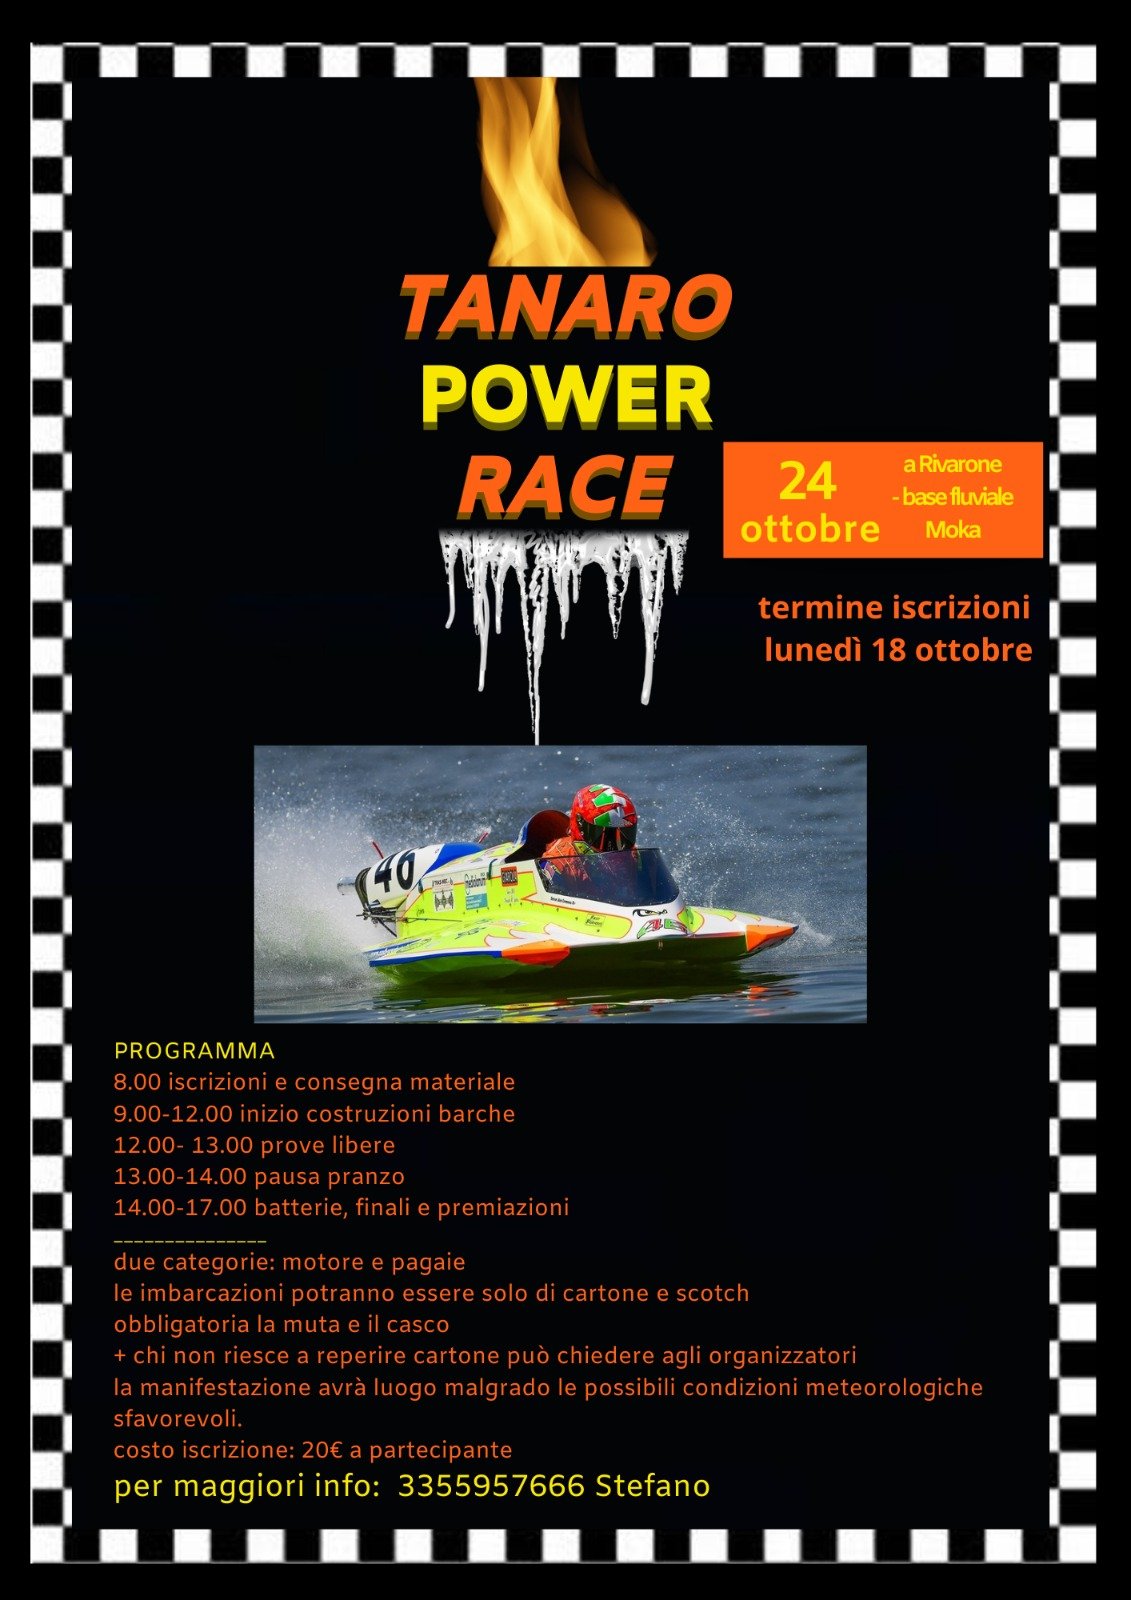 Domenica 24 ottobre “Tanaro Power Race” a Rivarone